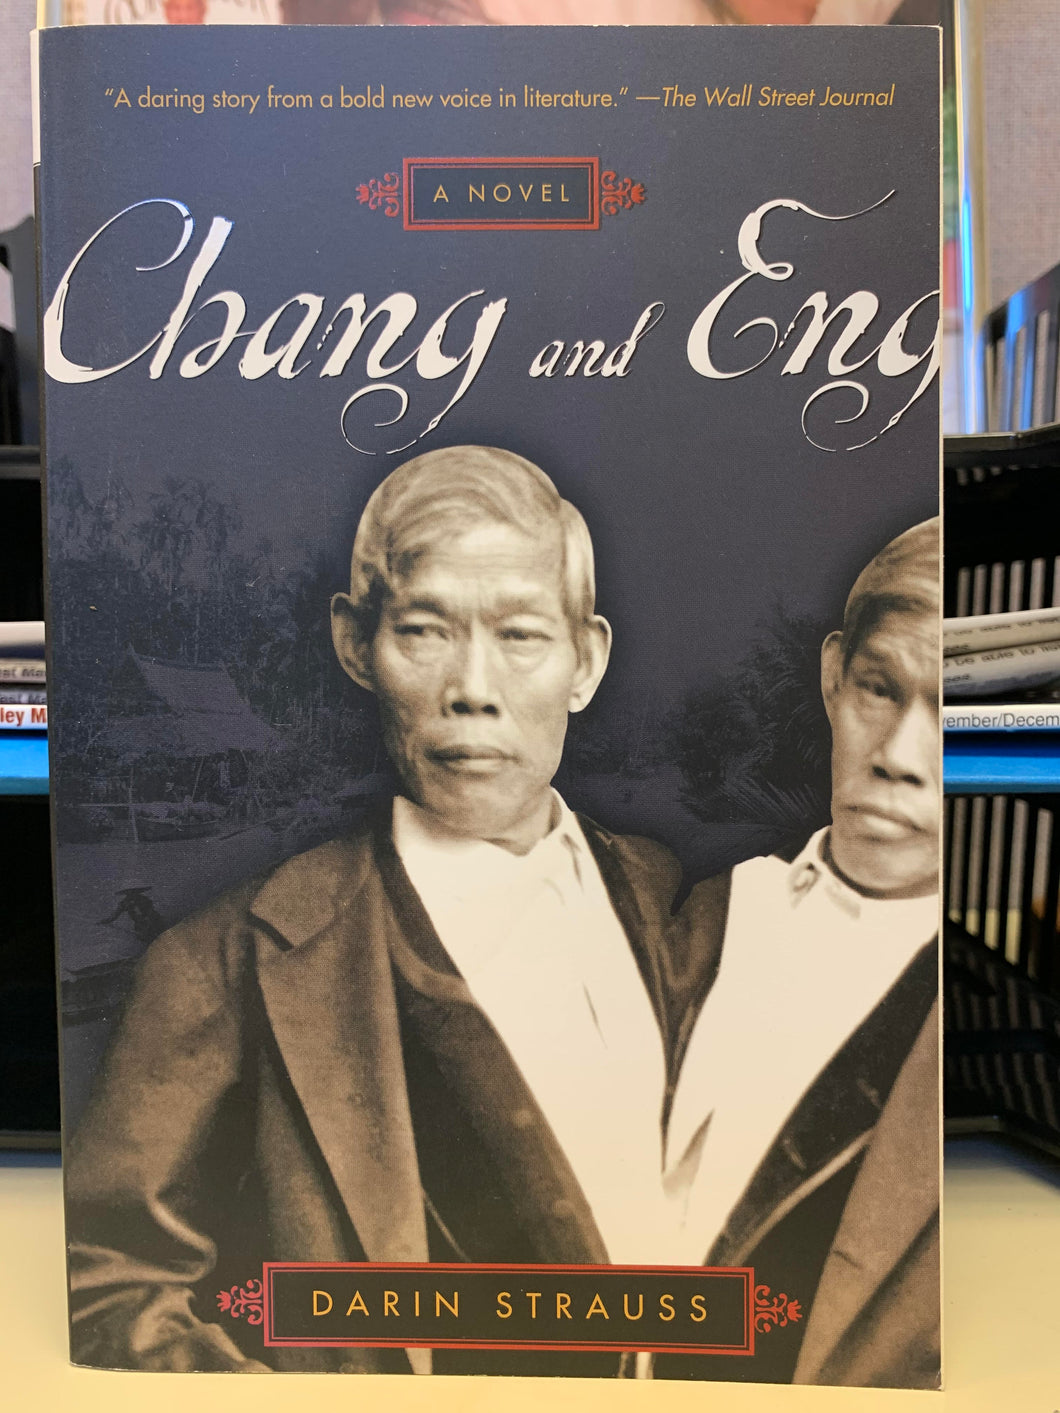 Chang & Eng: A Novel by Darin Strauss